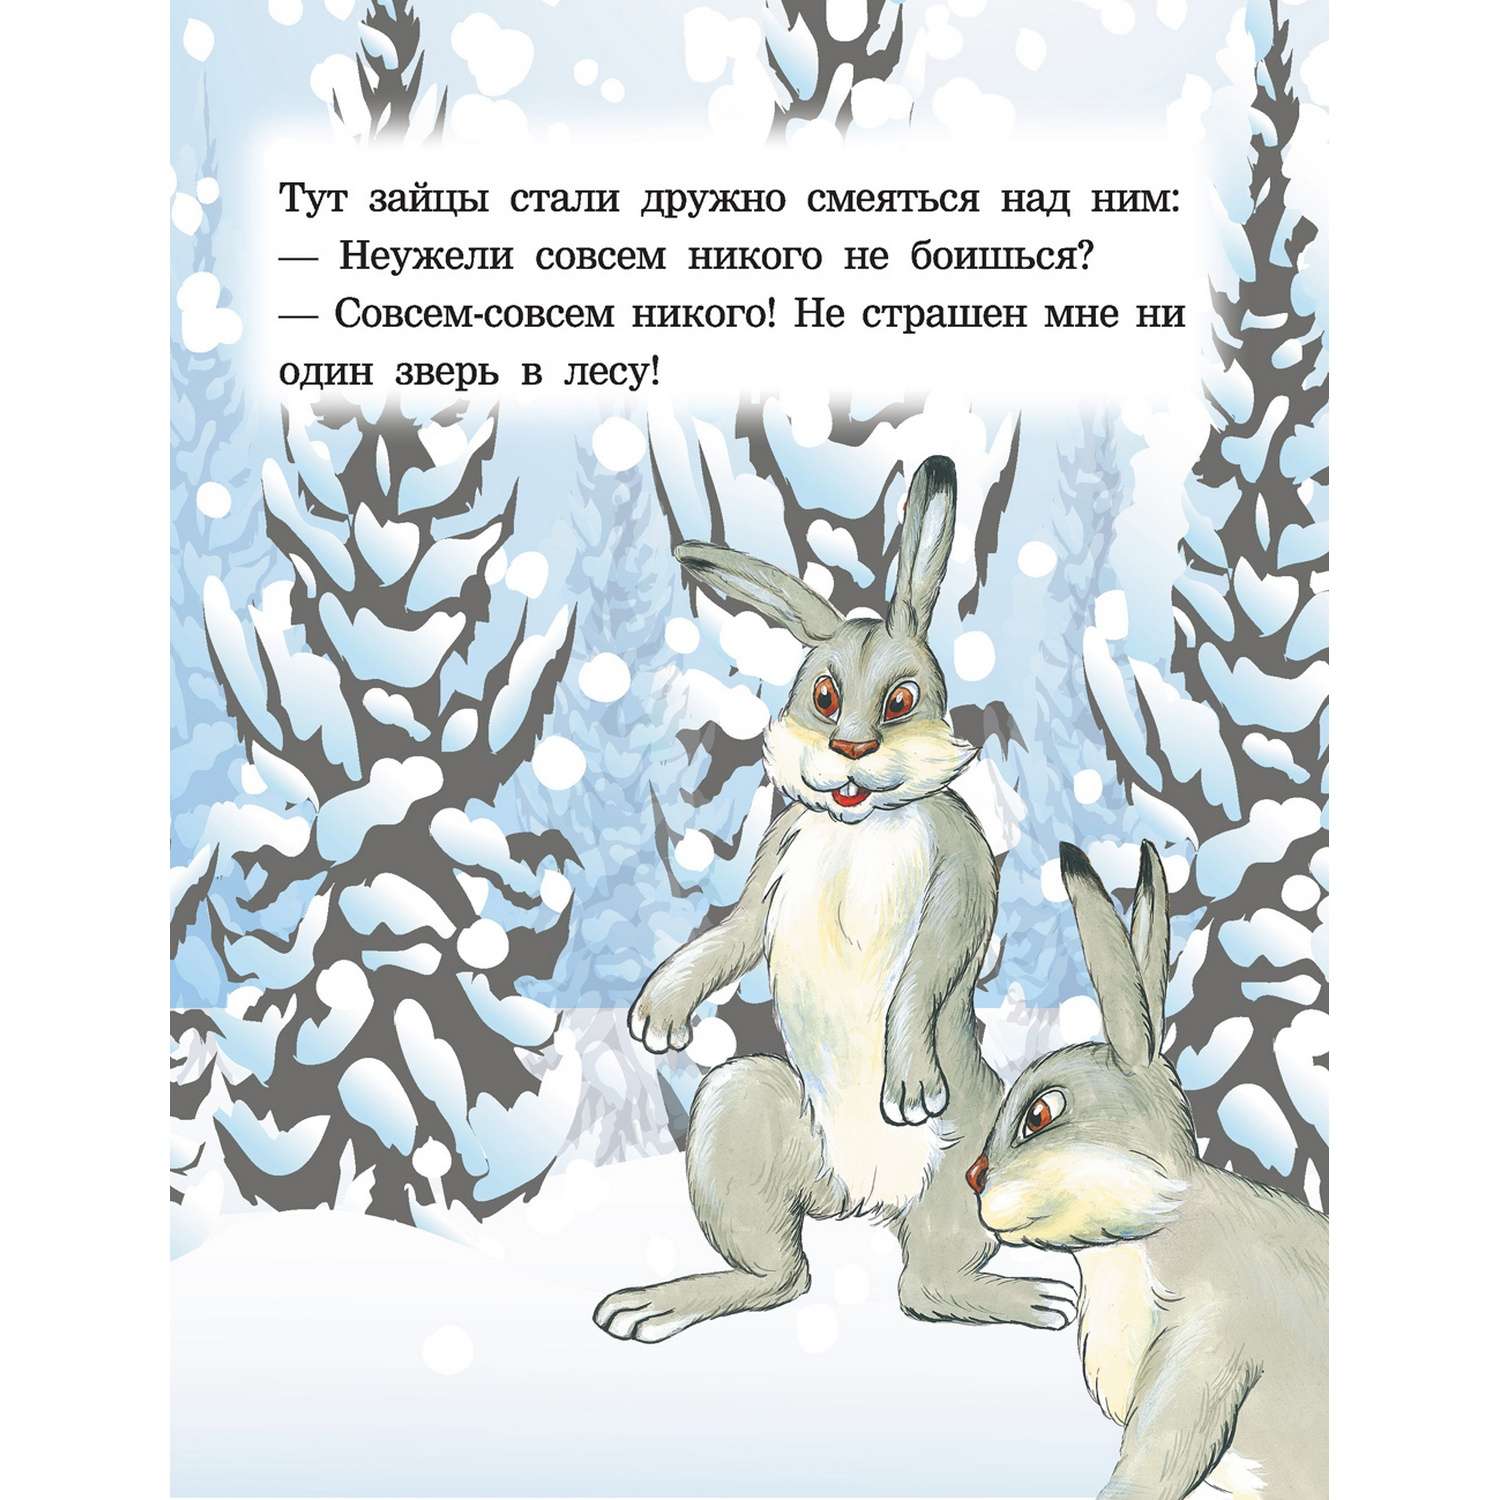 Благодарный заяц. Иллюстрации к сказке заяц хвастун. Сказки про зайца новый год. Задания по сказке заяц хваста. Заяц хваста спас ворону.